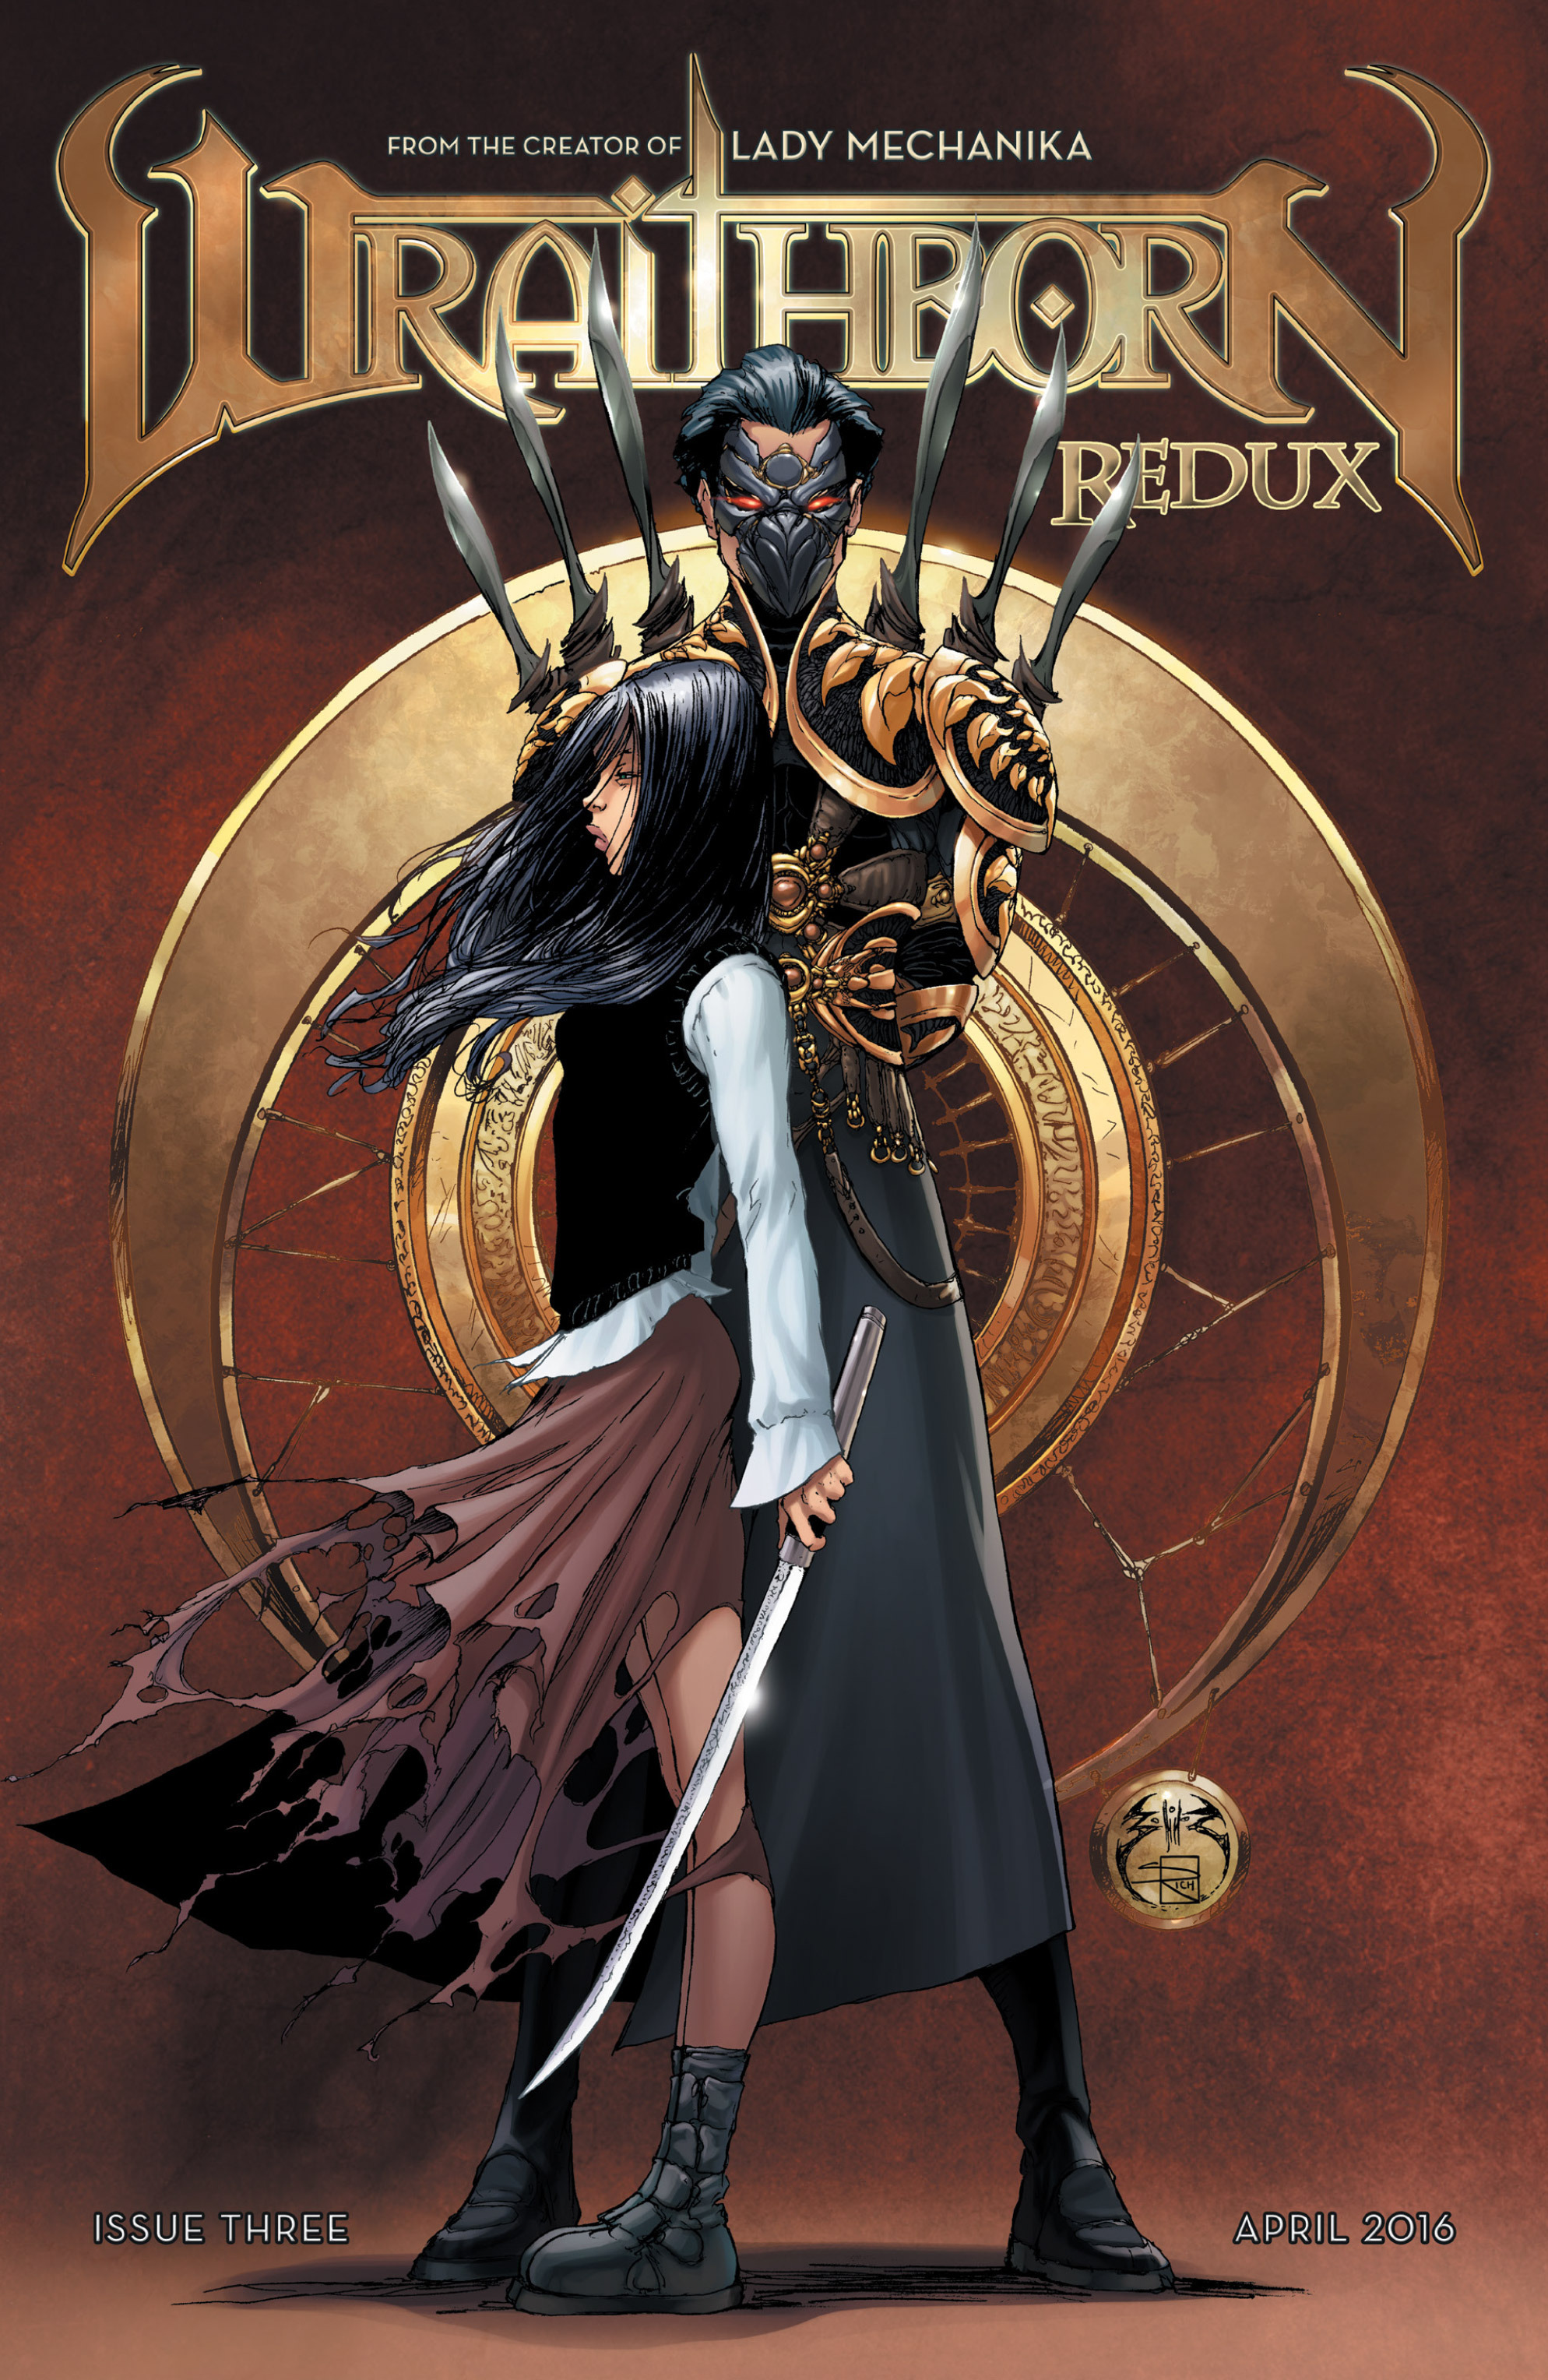 Read online Wraithborn Redux comic -  Issue #3 - 1